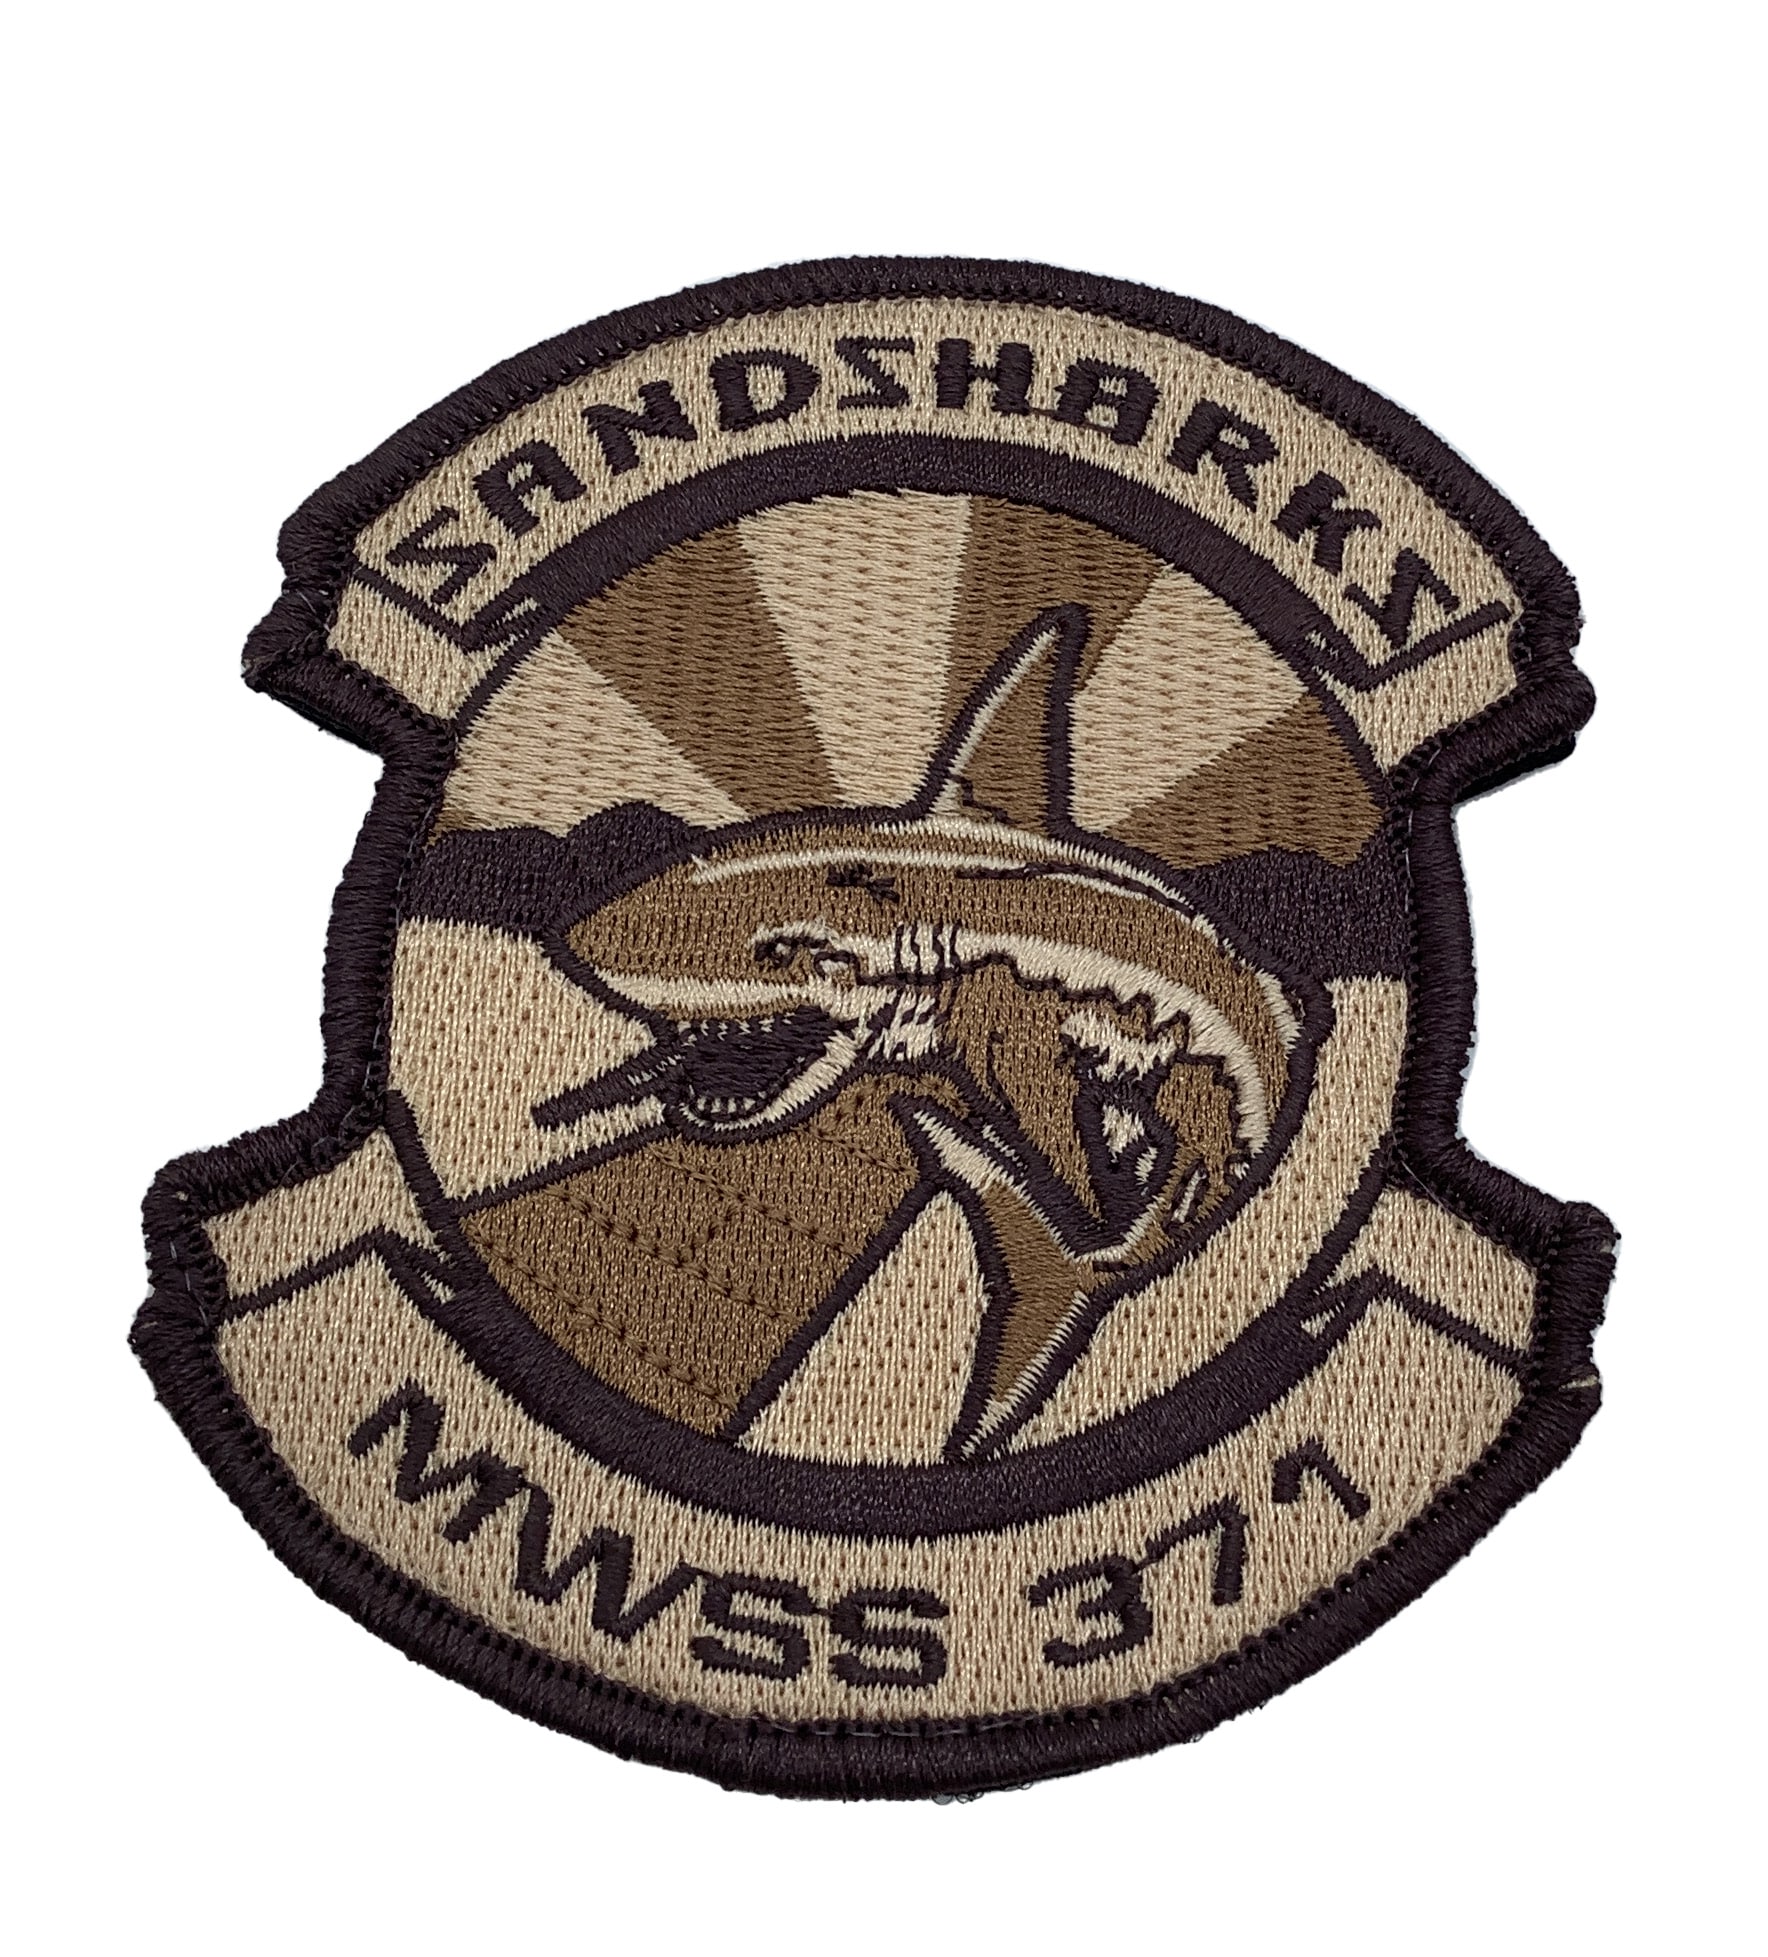 MWSS-371 Sandsharks (Tan) Patch – Plastic Backing